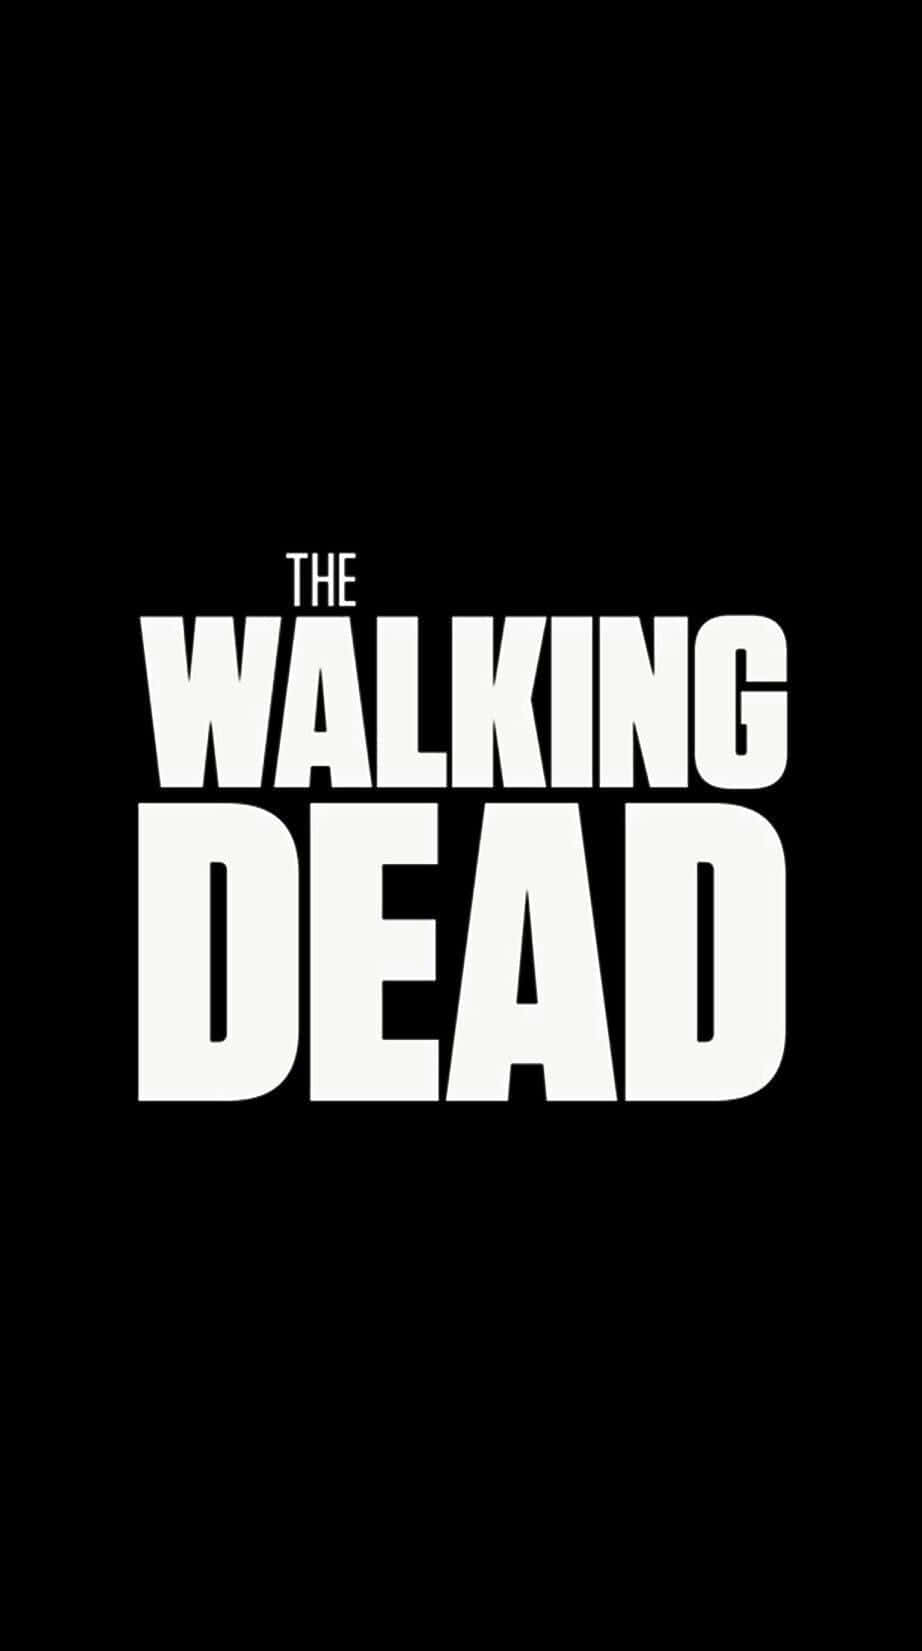 The Walking Dead Logo On A Black Background Wallpaper